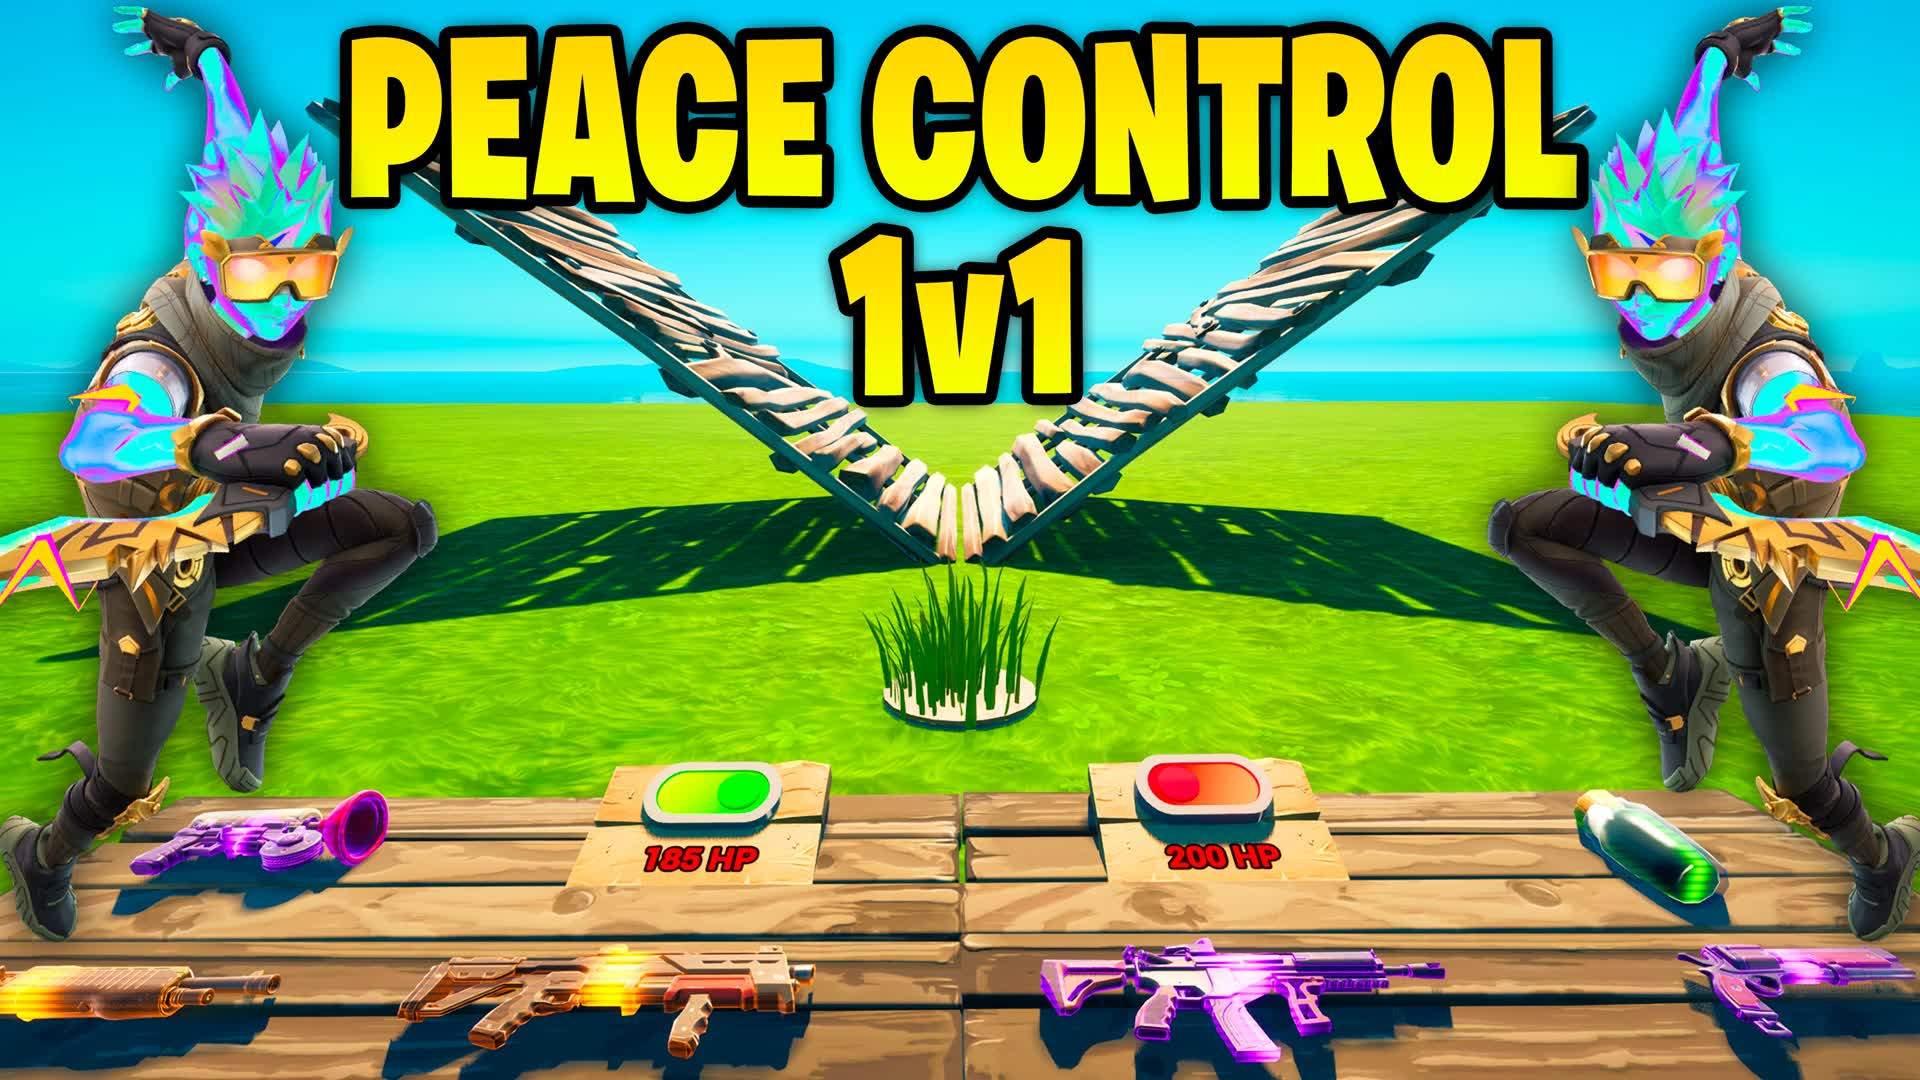 1v1 Peace Control BF